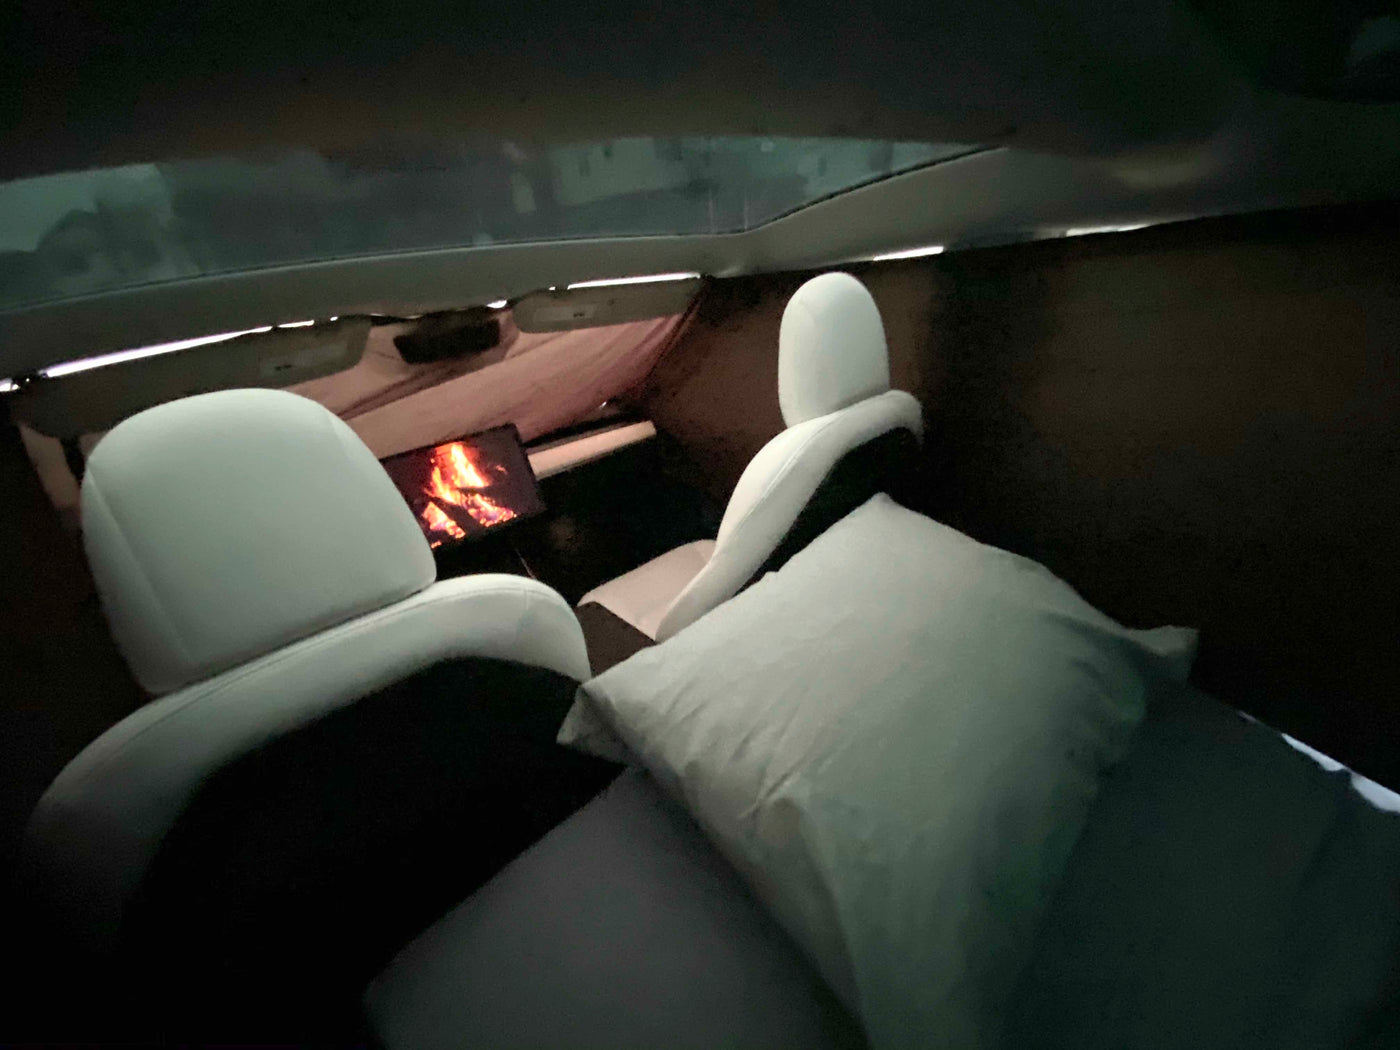 TESMAT  Car Camping Mattress and Privacy Screen for Tesla Model 3